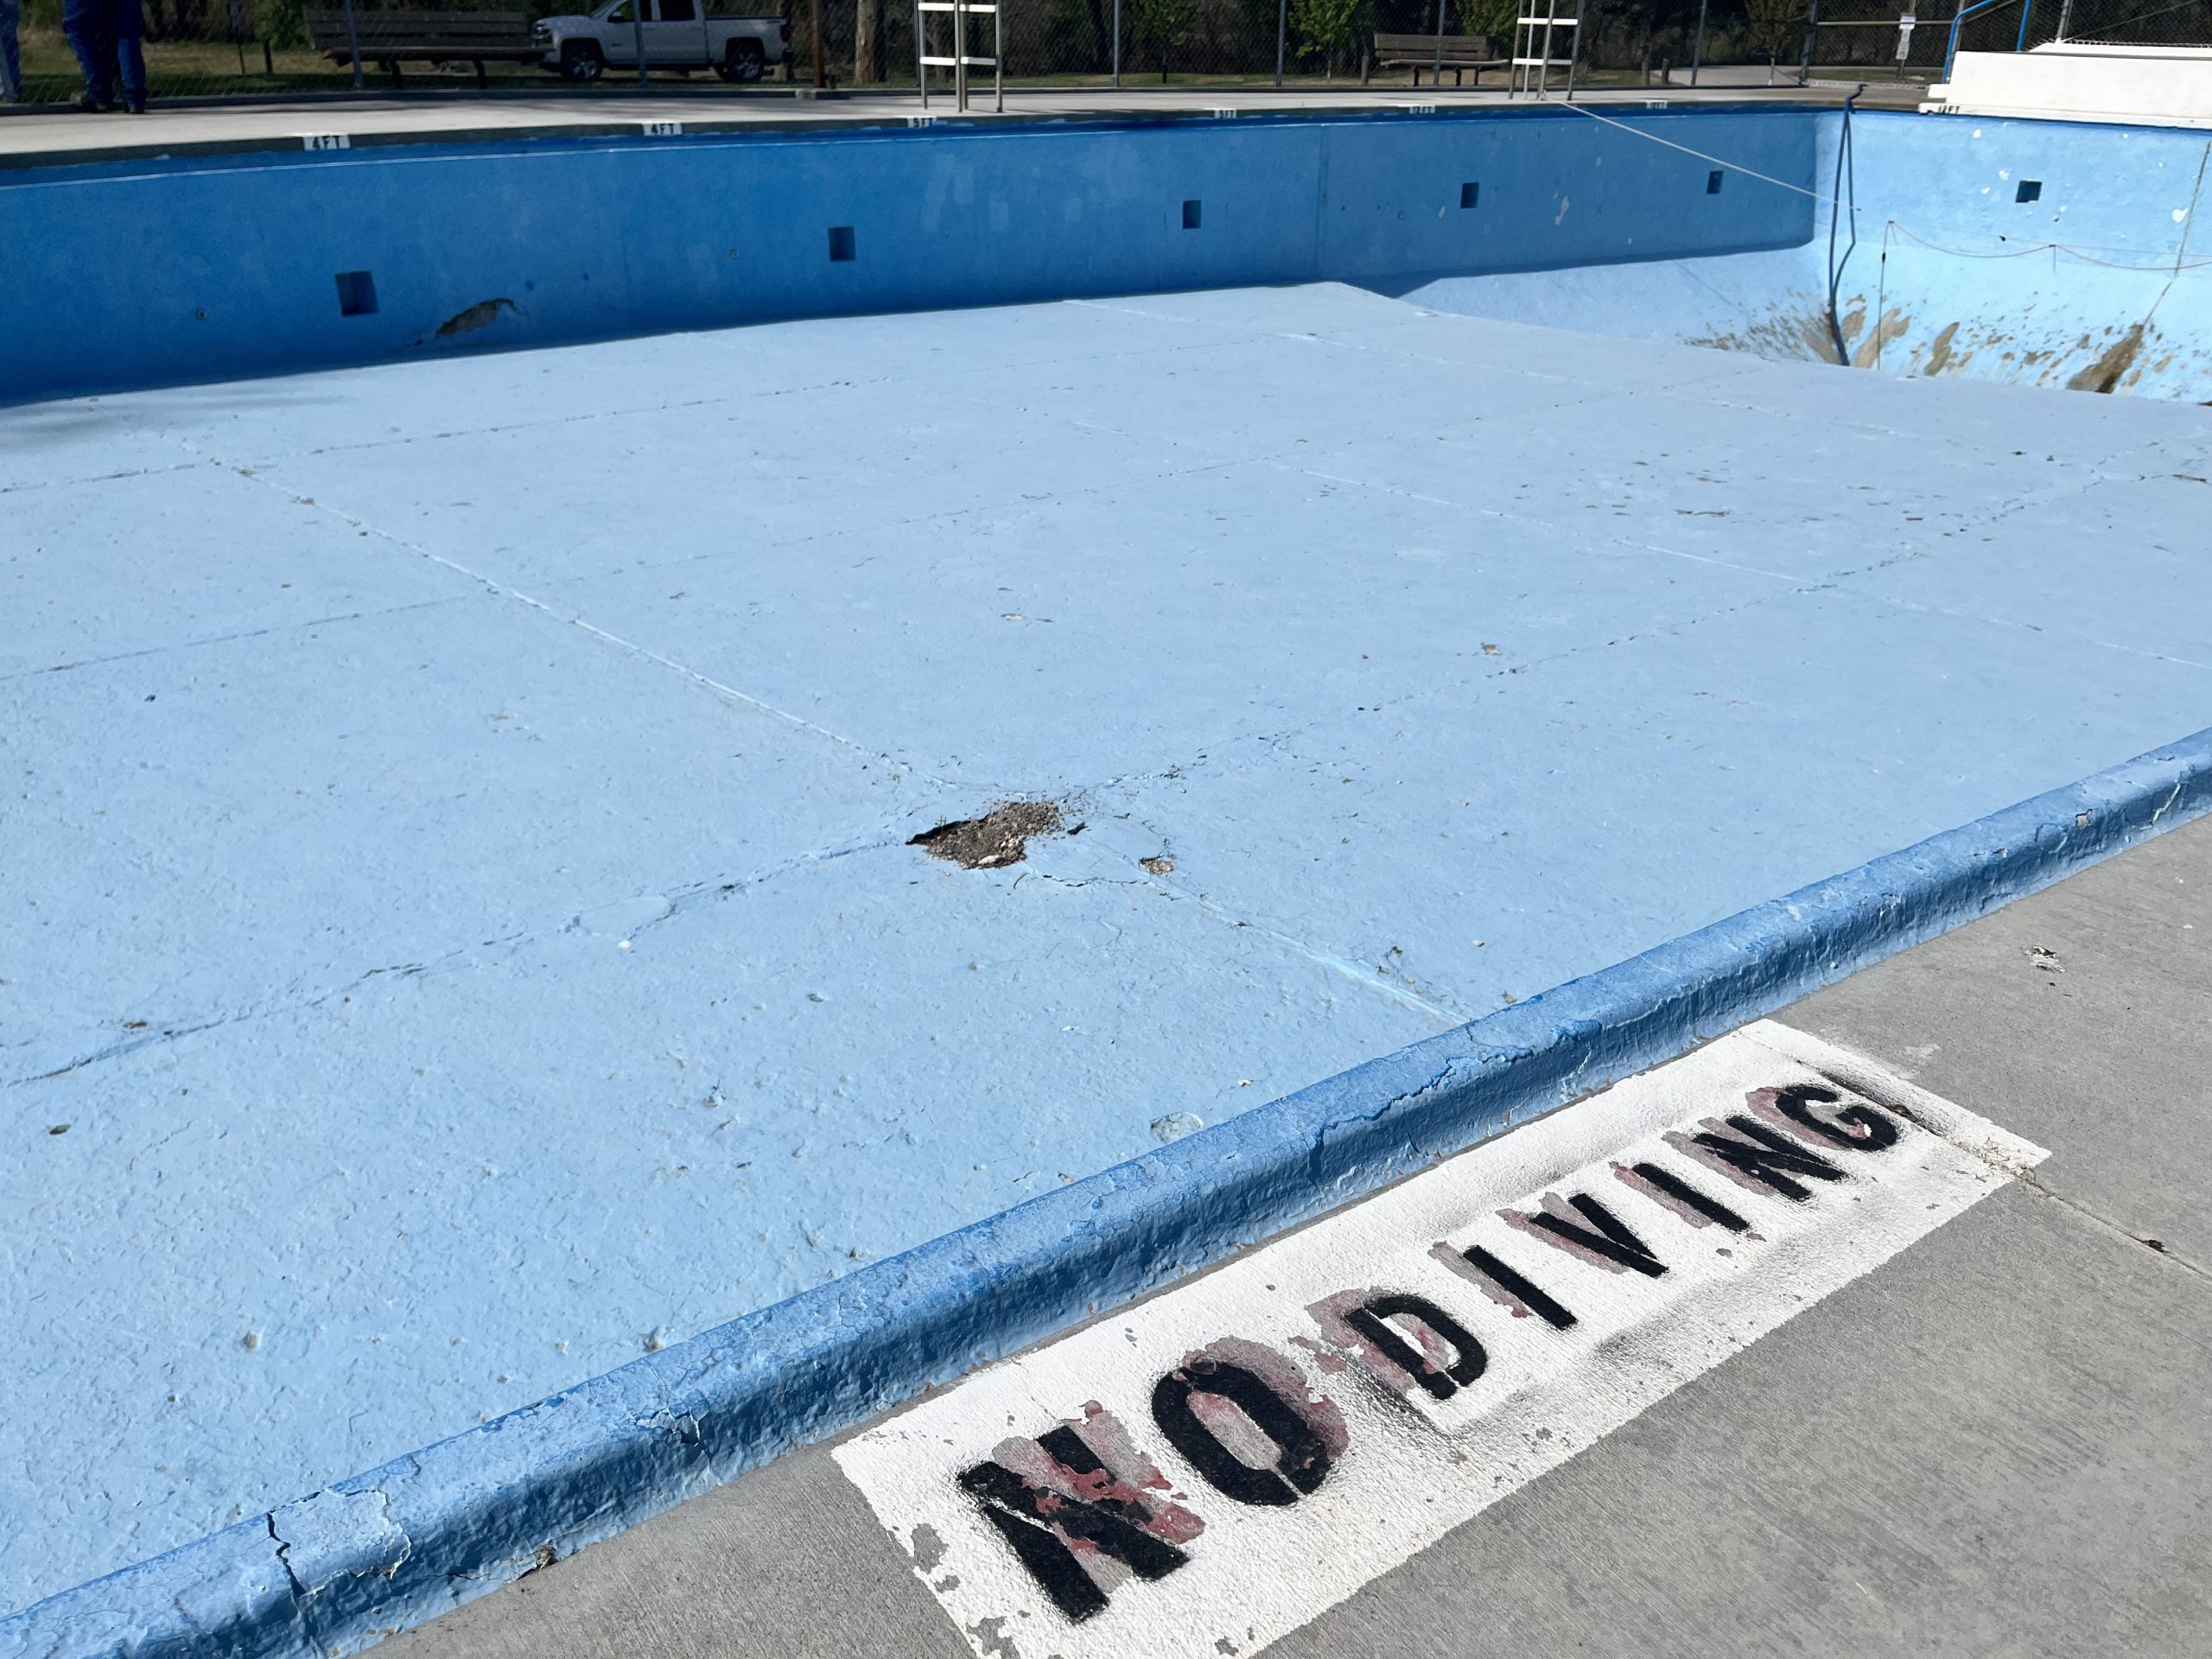 Humboldt pool closed over safety concerns